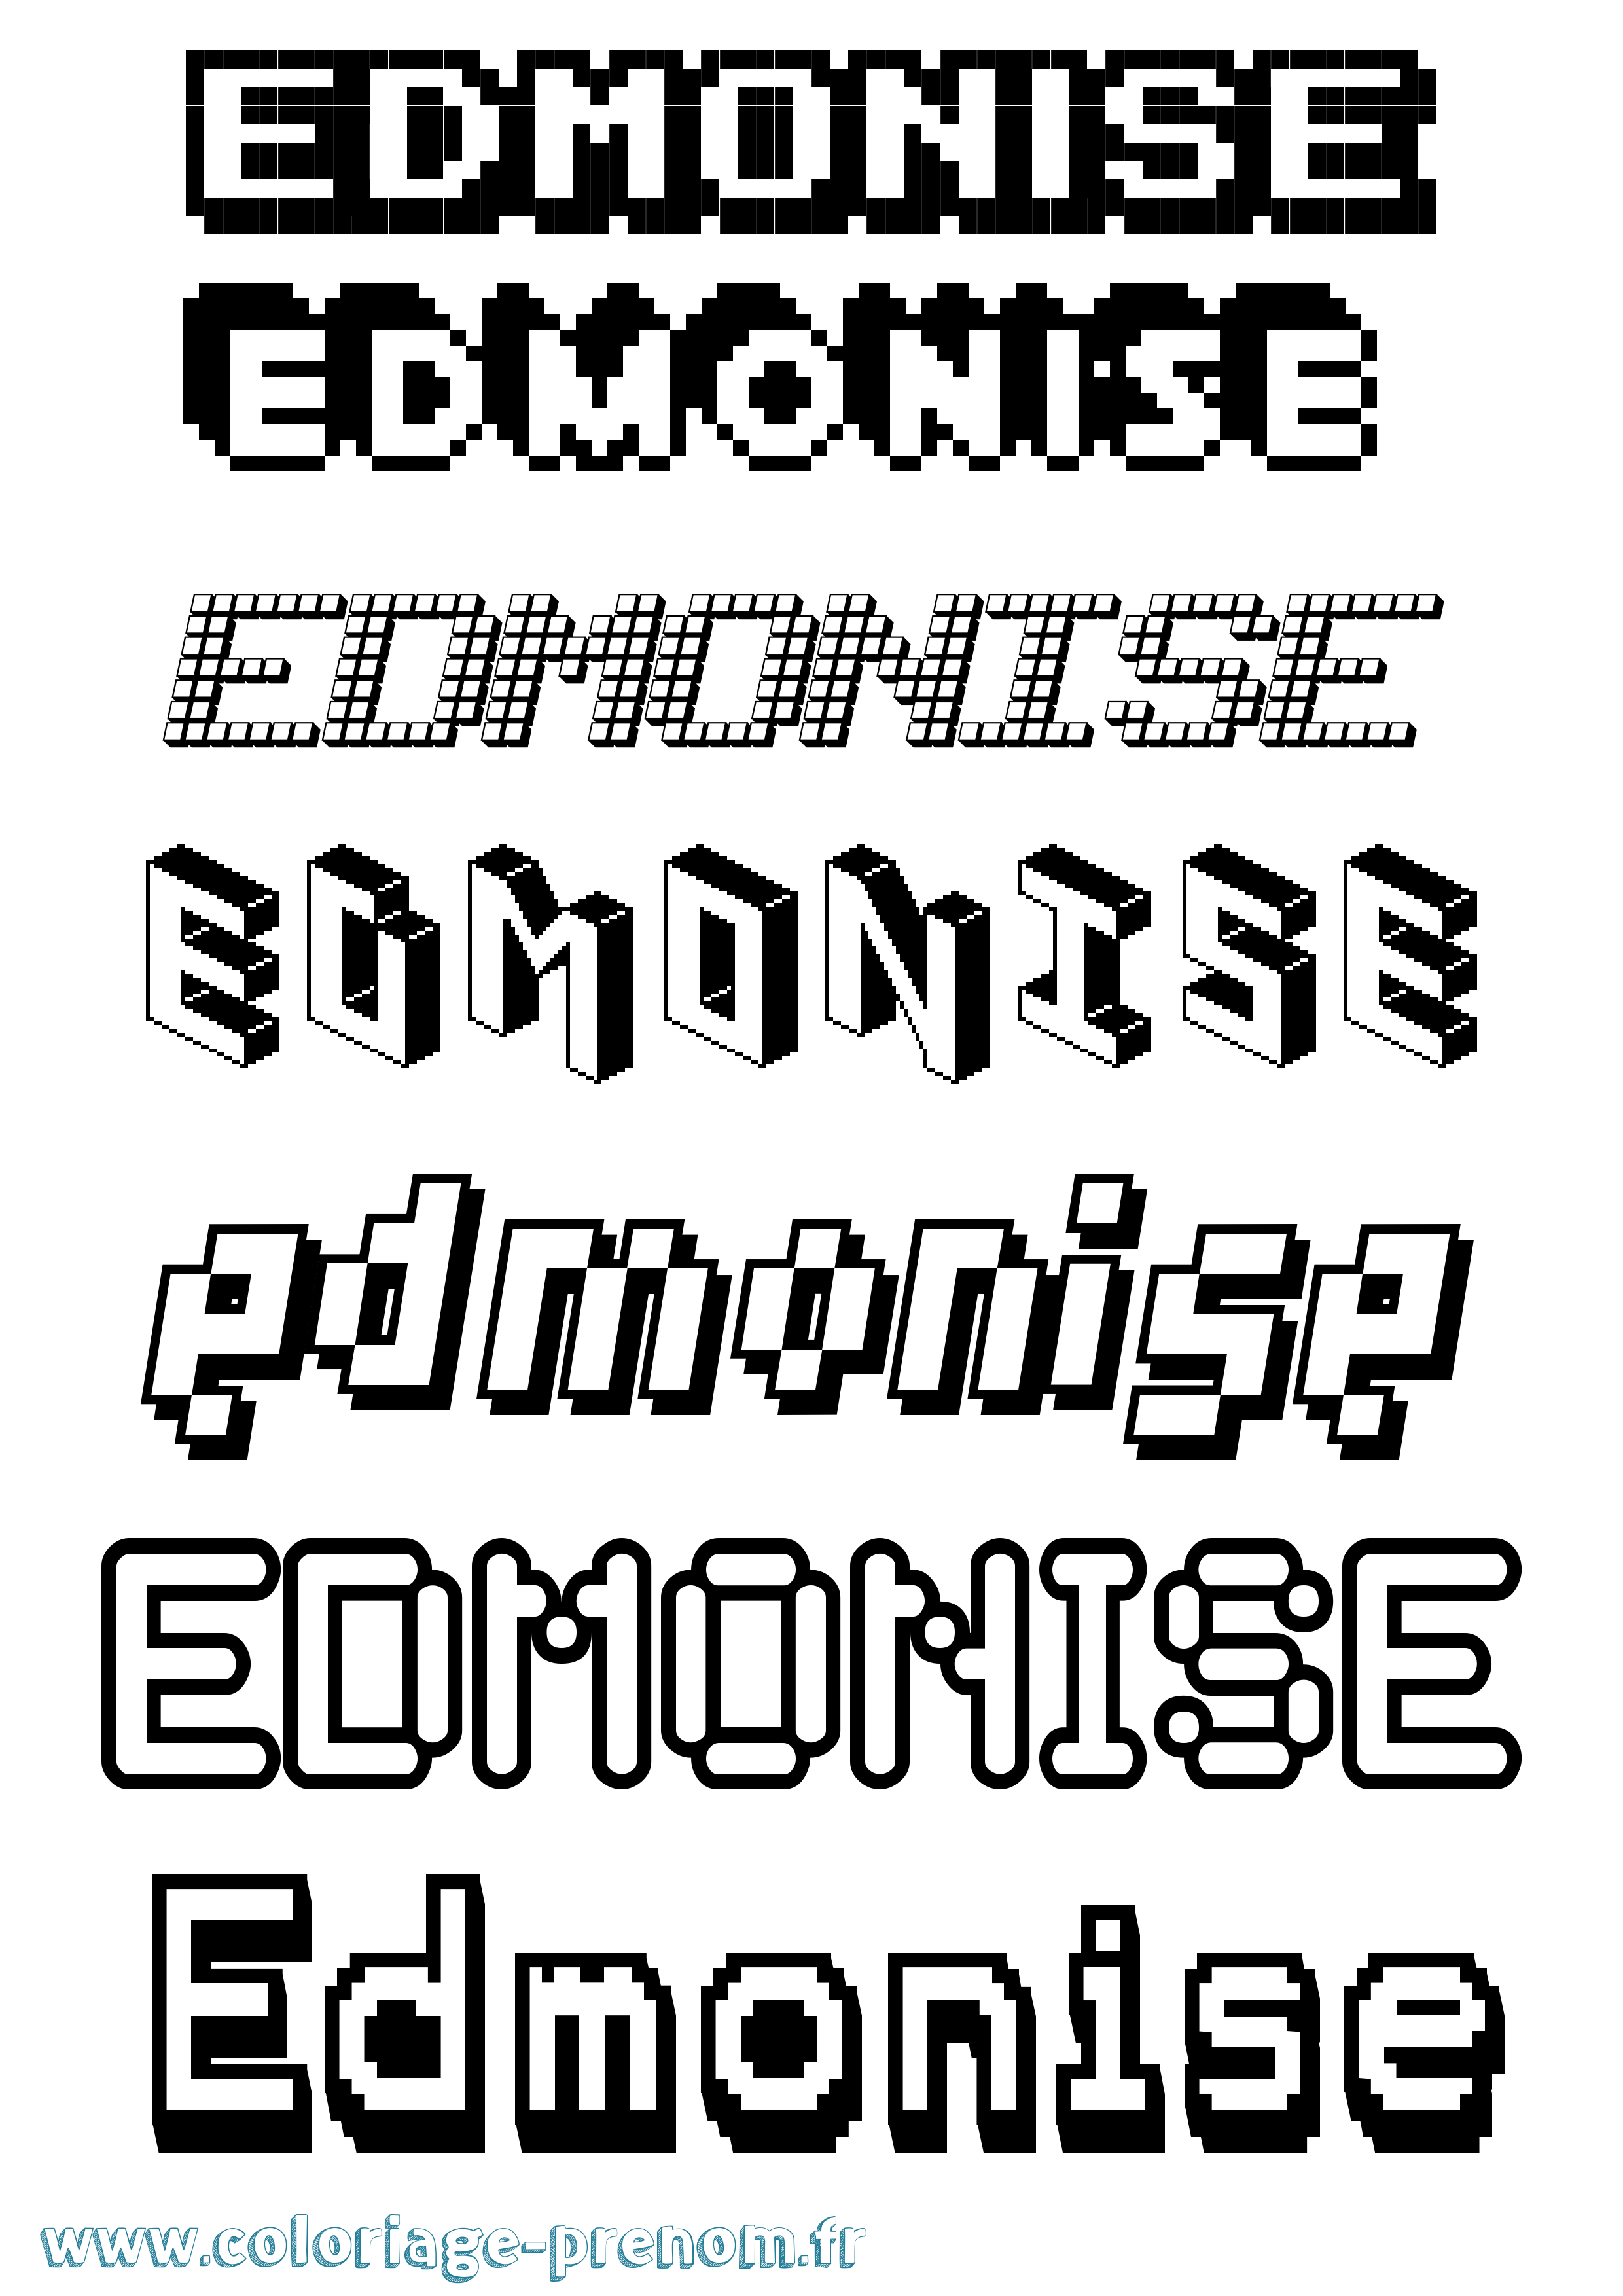 Coloriage prénom Edmonise Pixel